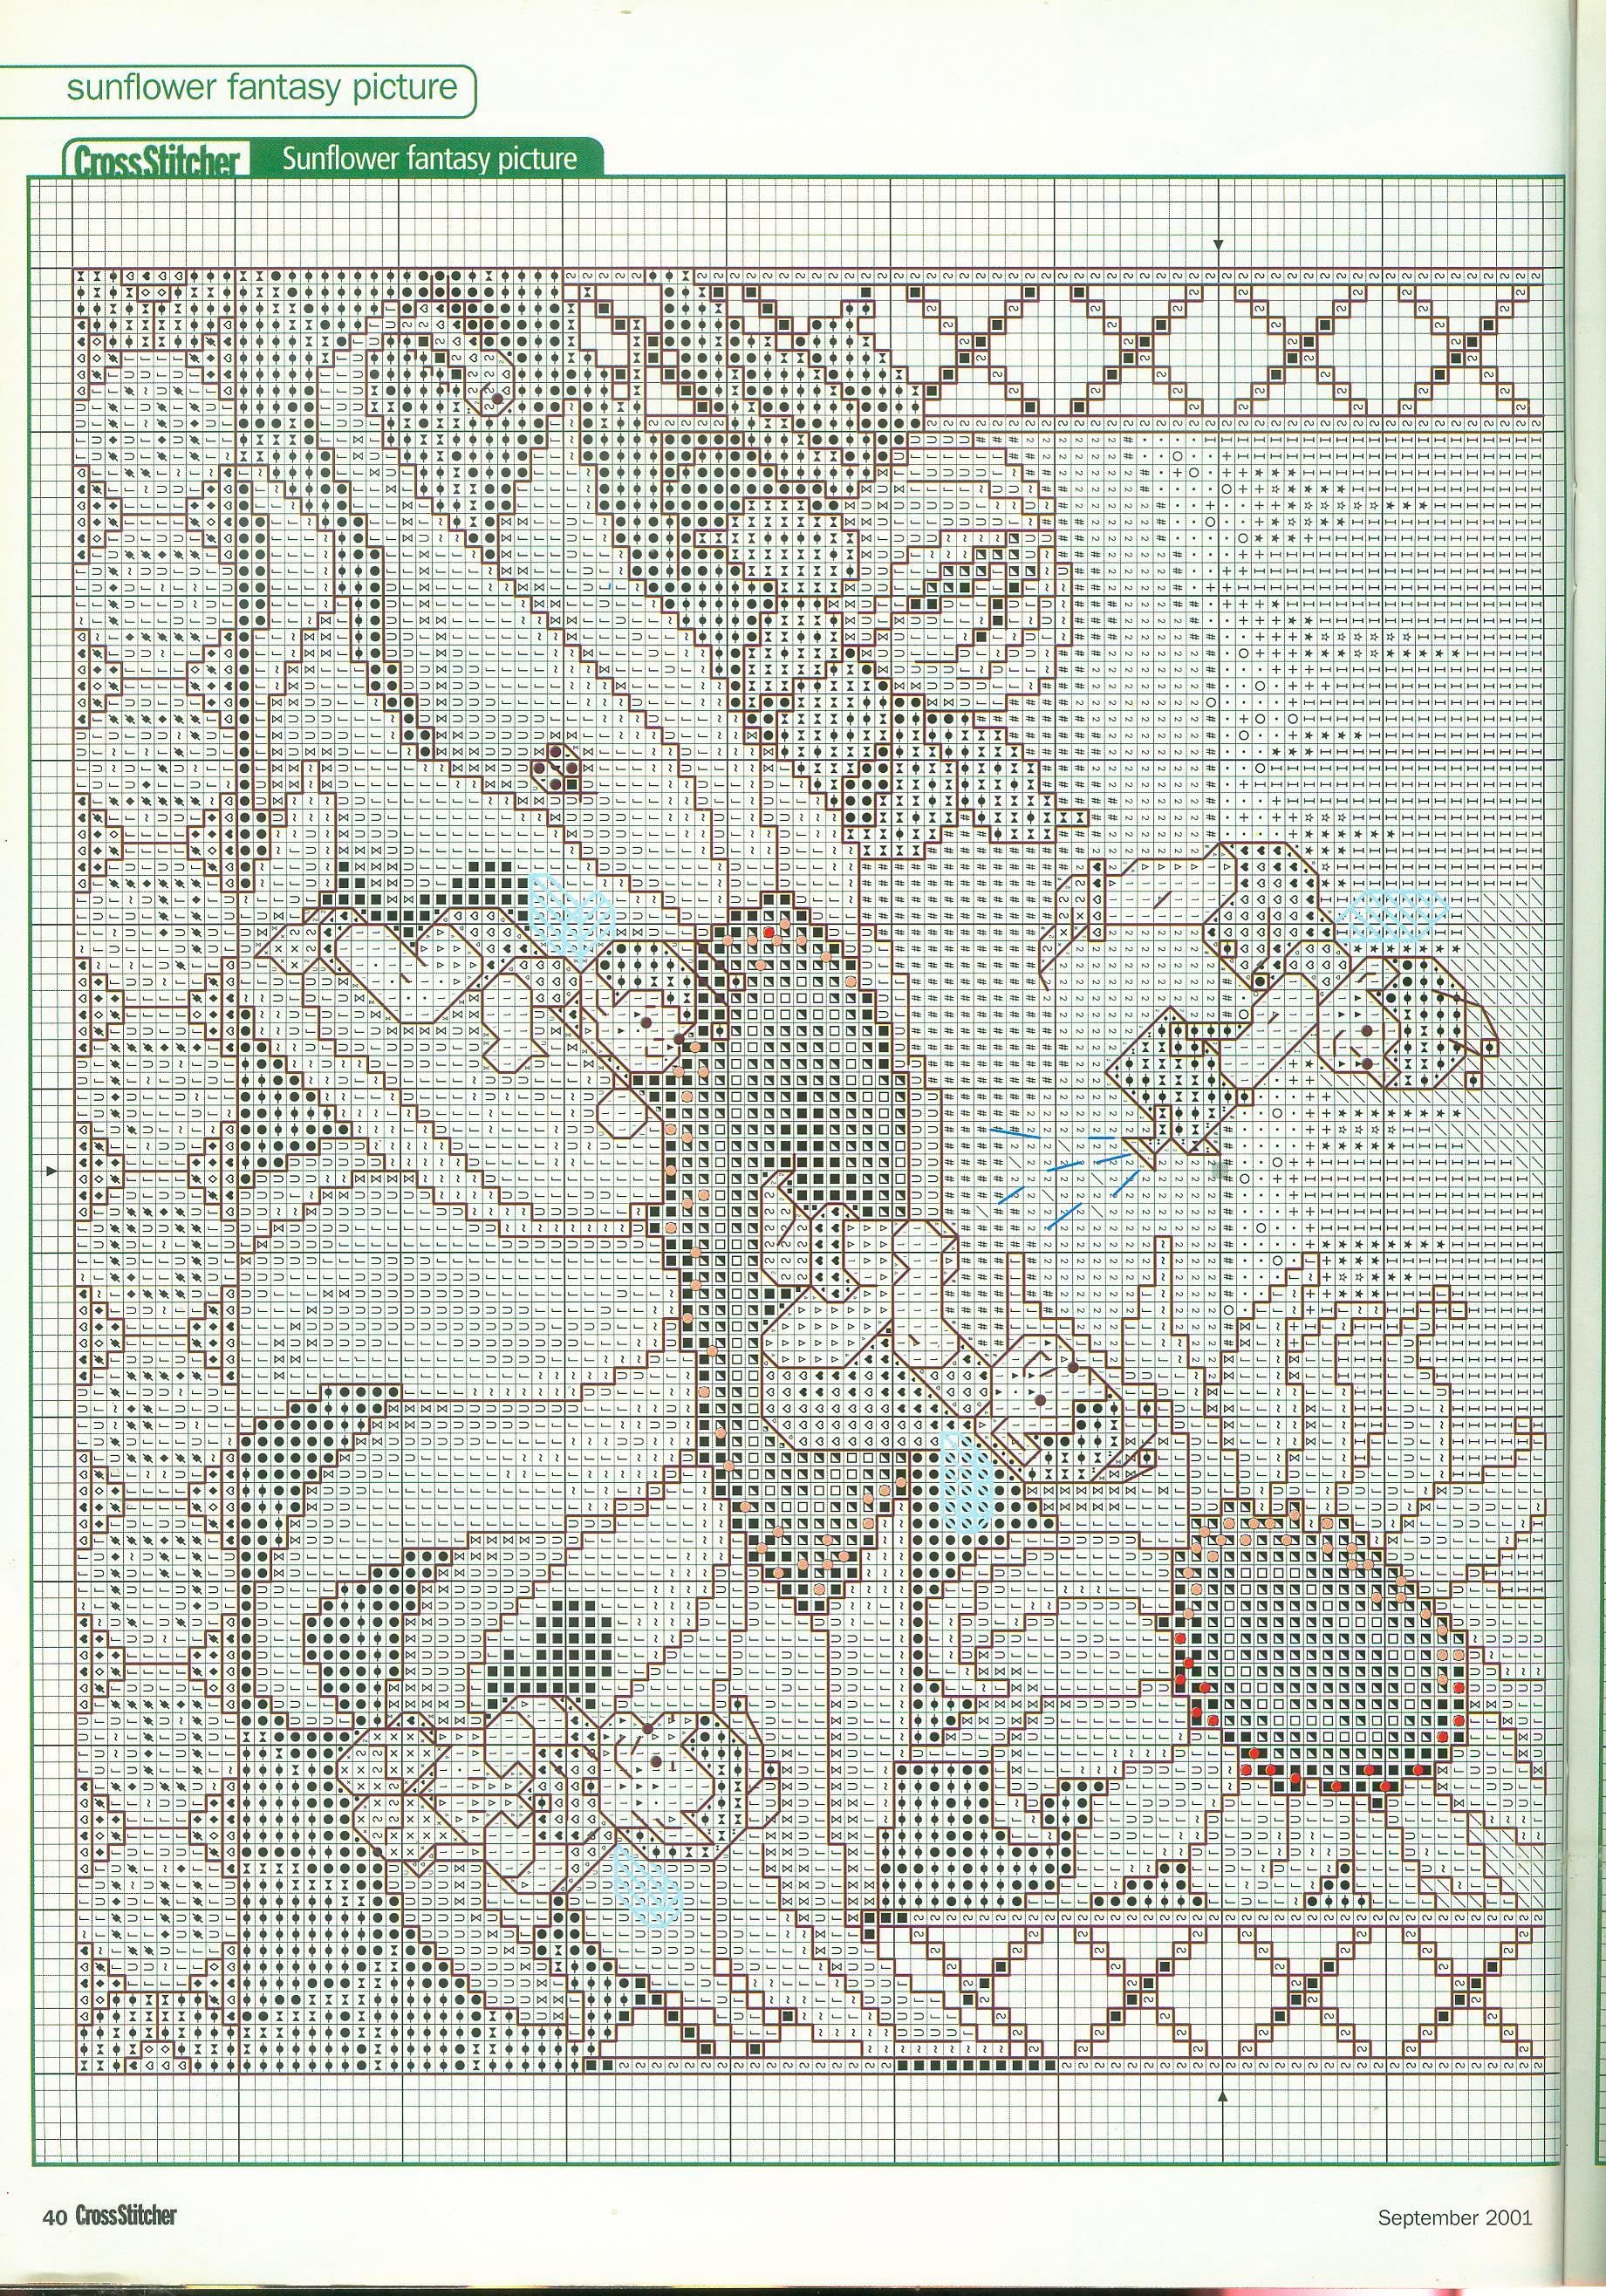 imagination of children and sunflowers cross stitch pattern (2)